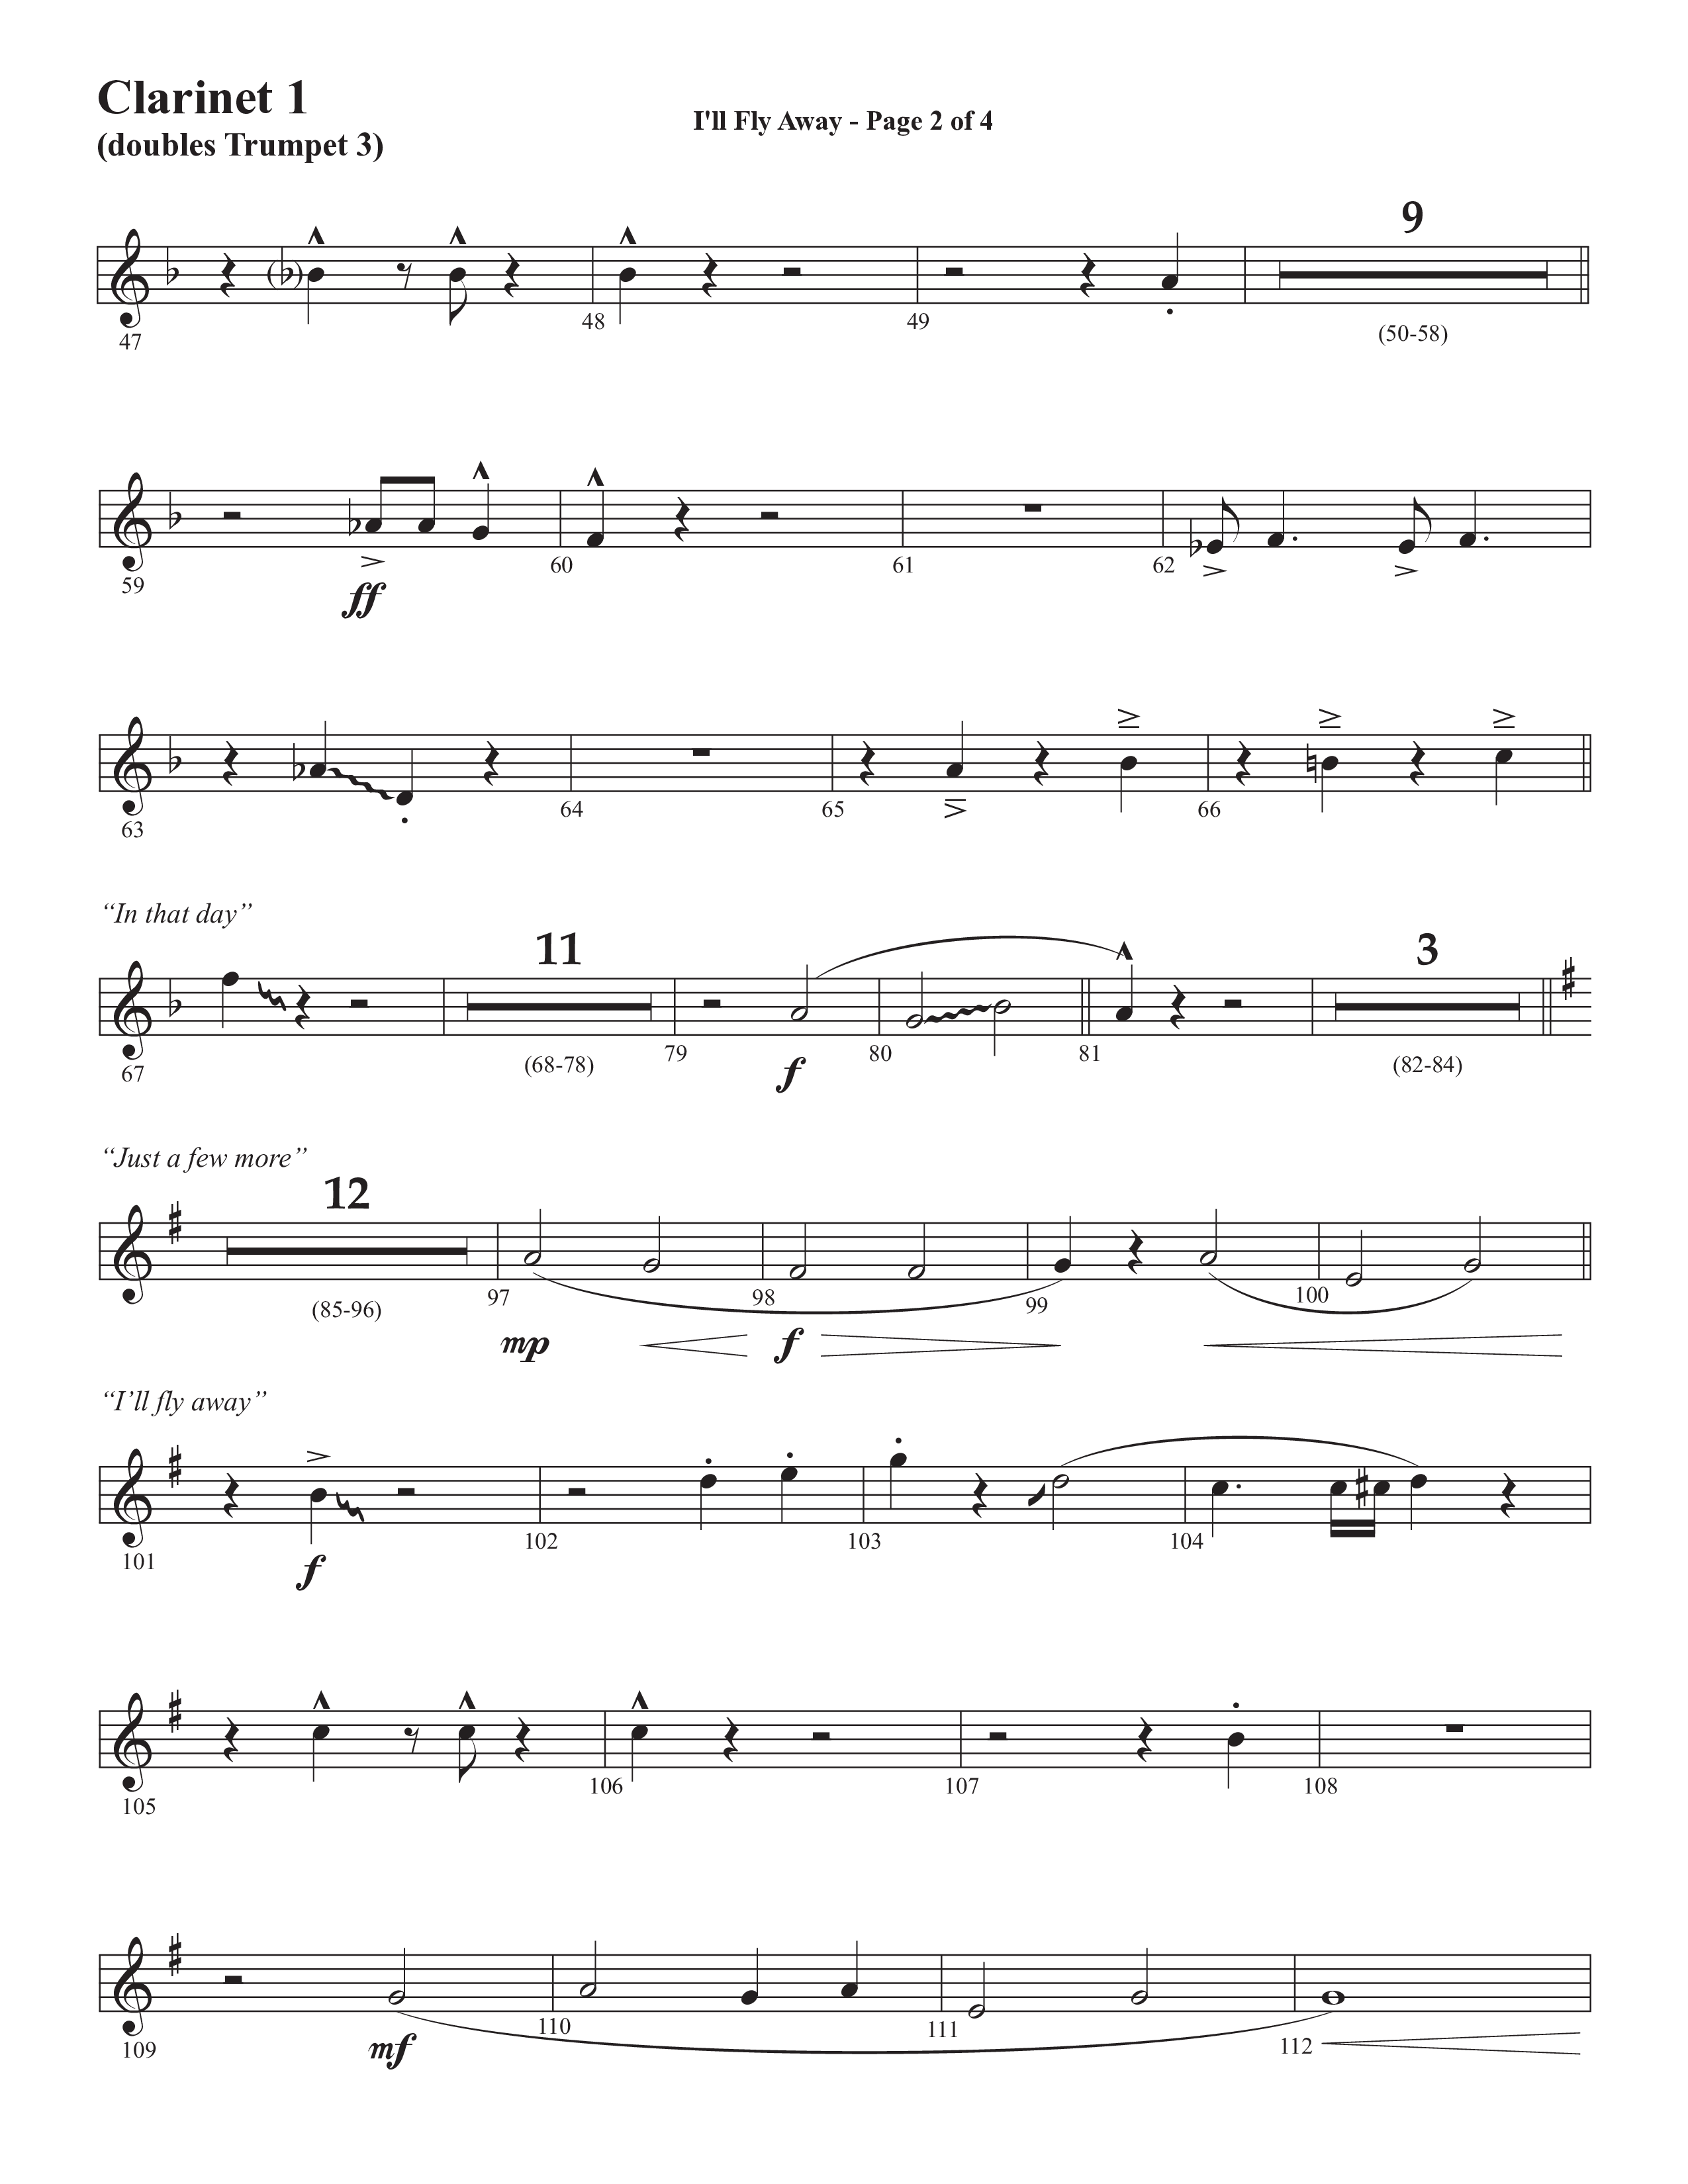 I'll Fly Away (Choral Anthem SATB) Clarinet 1/2 (Semsen Music / Arr. Michael Lee)